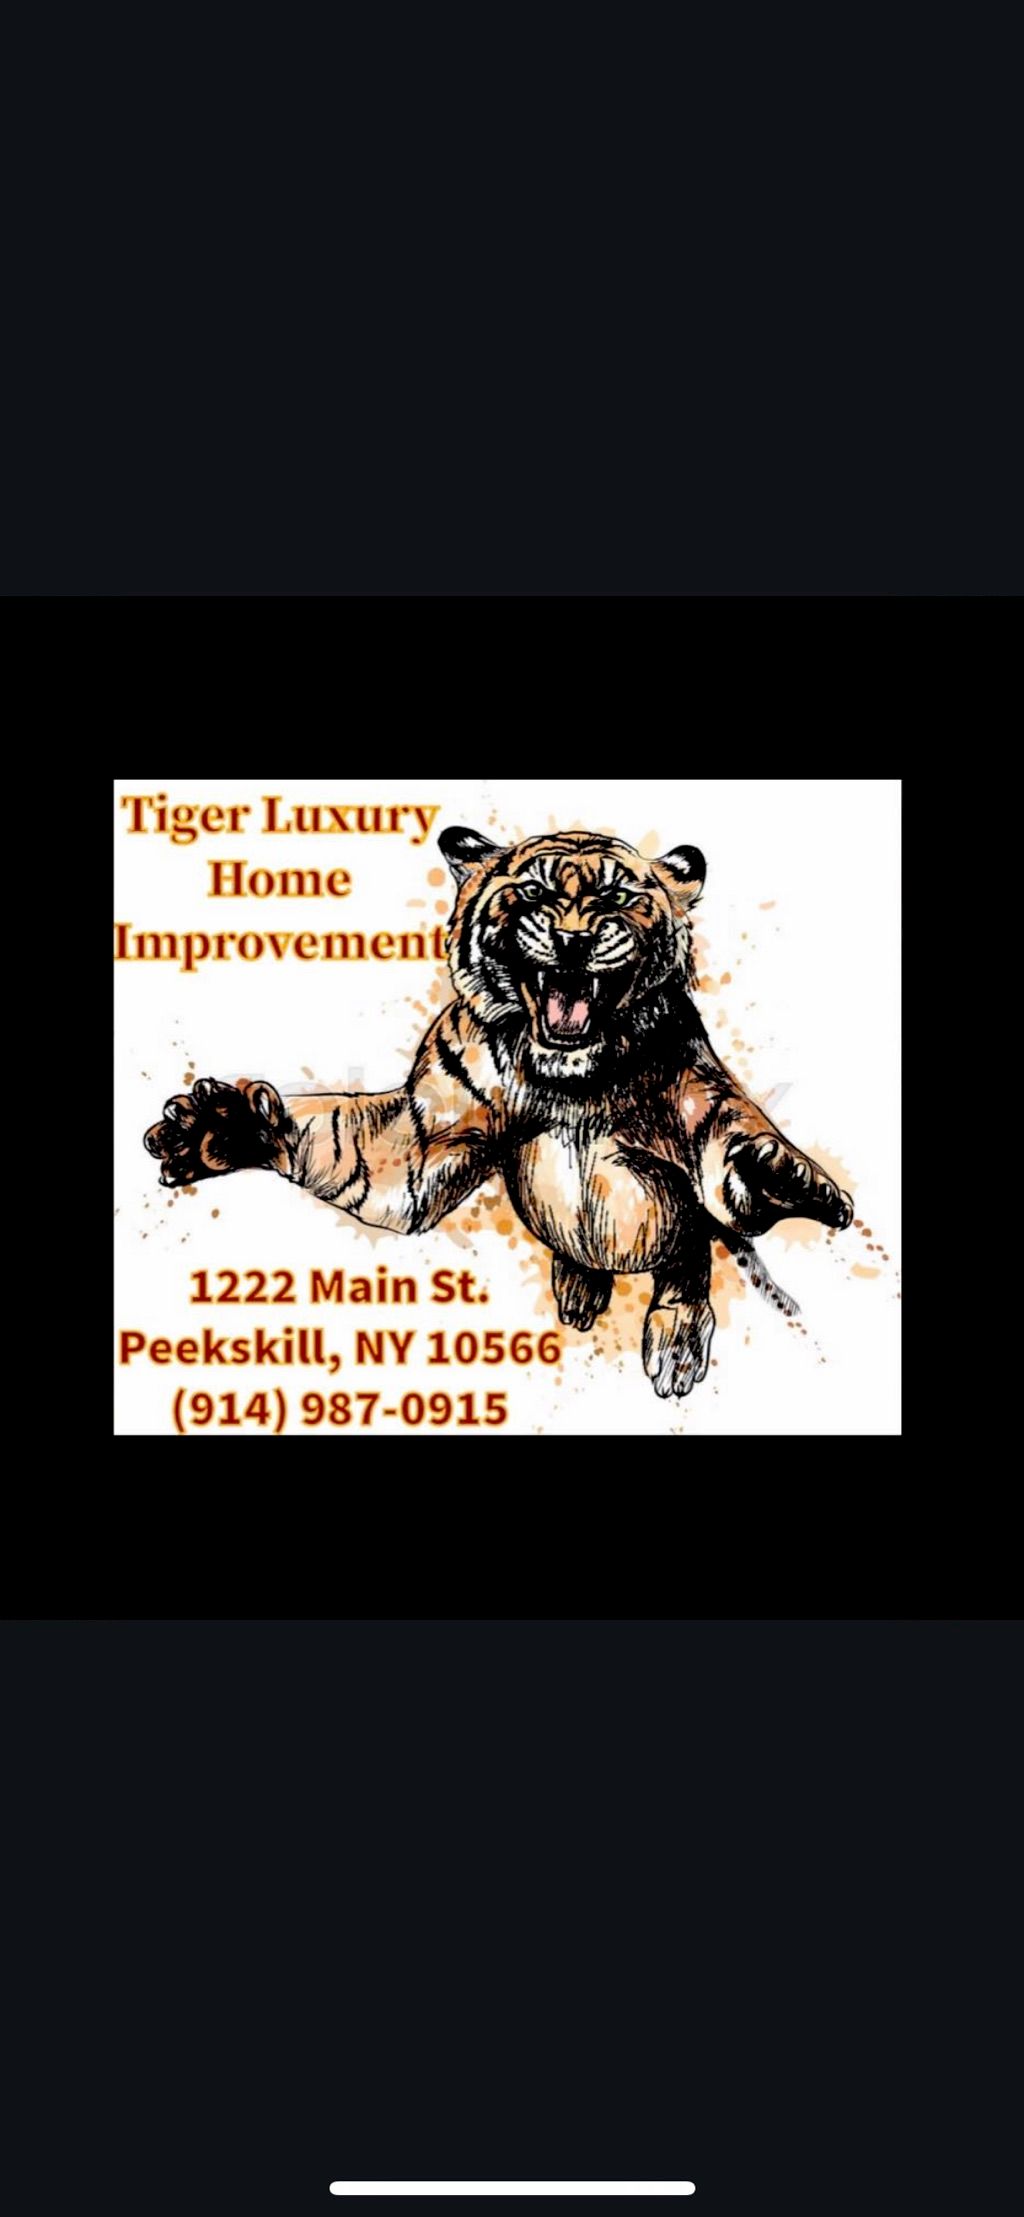 Tiger Luxury Home Improvement